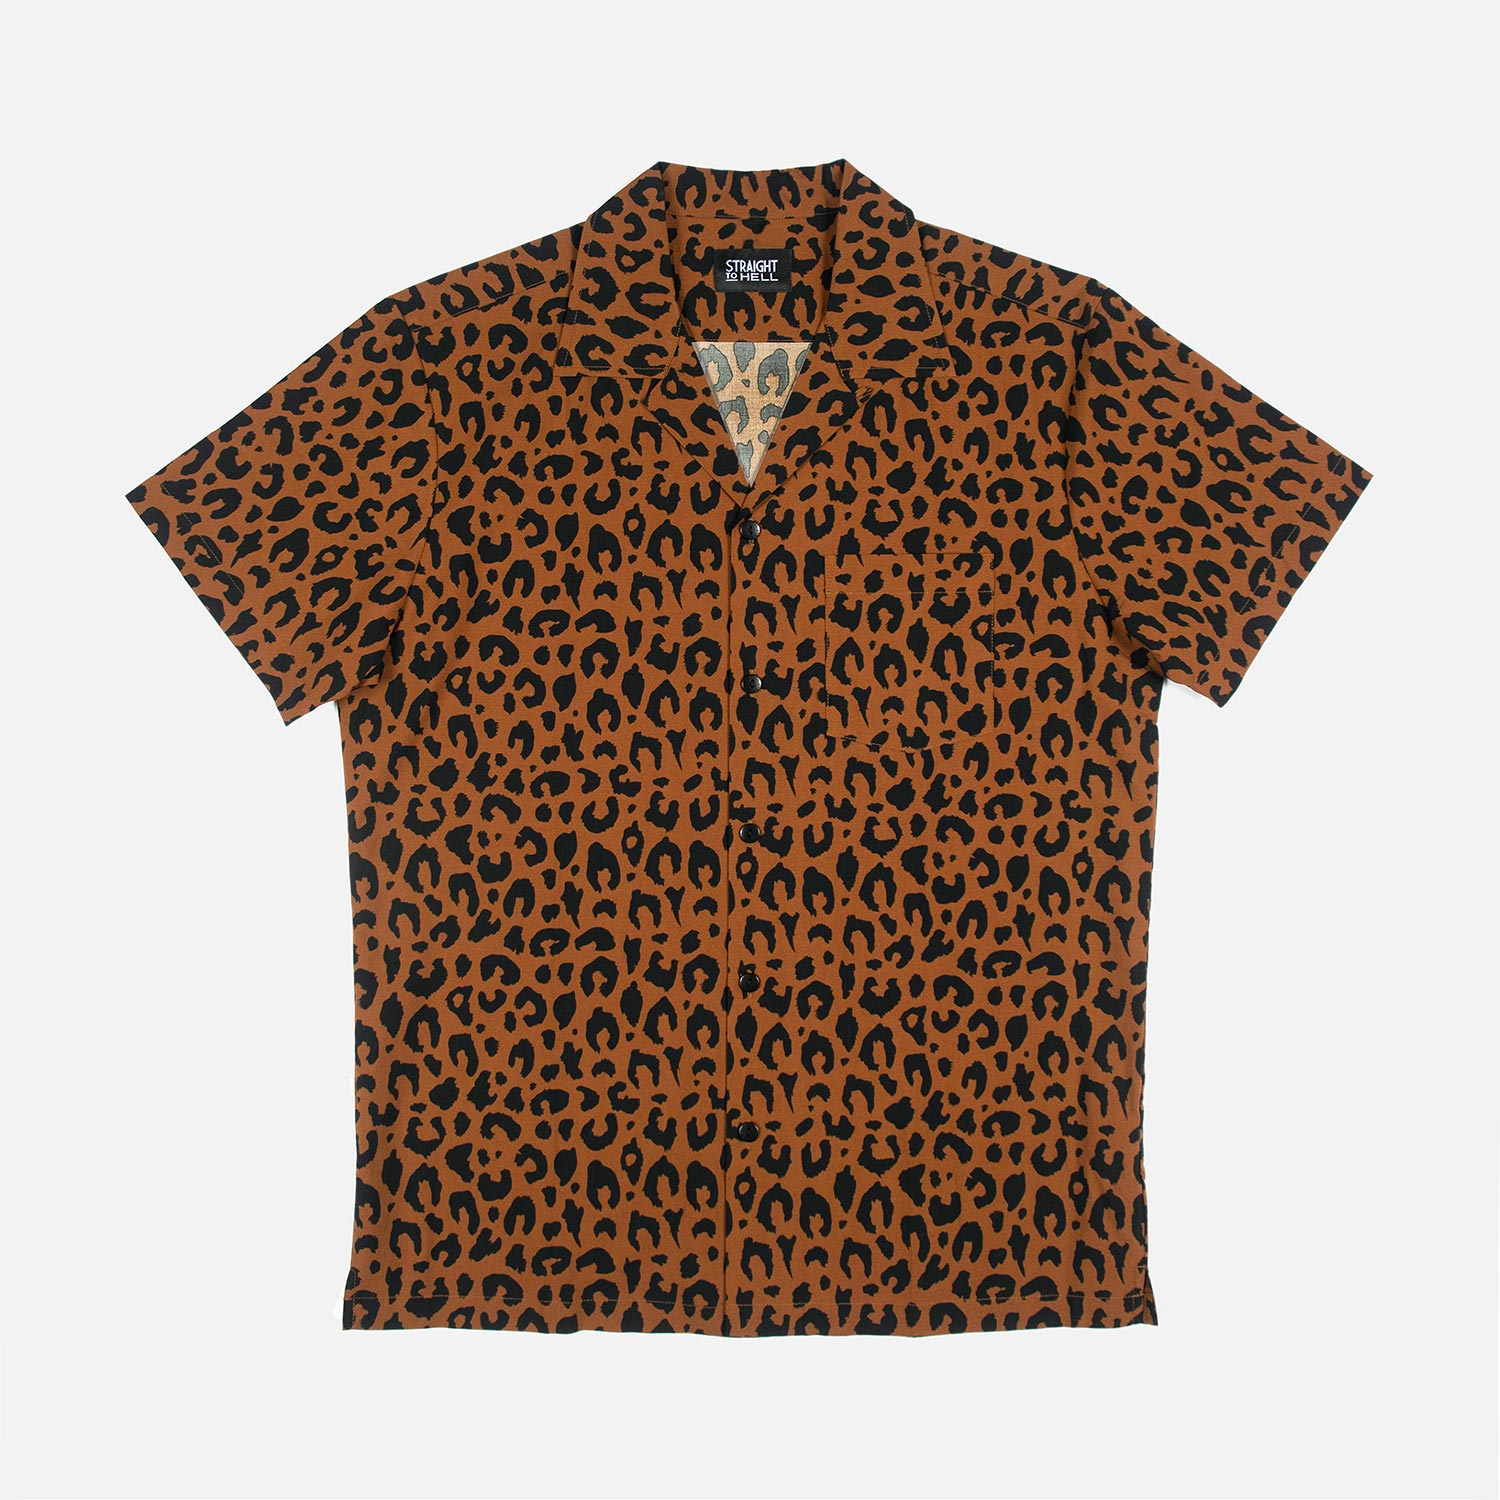 Straight to Hell Men's Boss Leopard Print Shirt